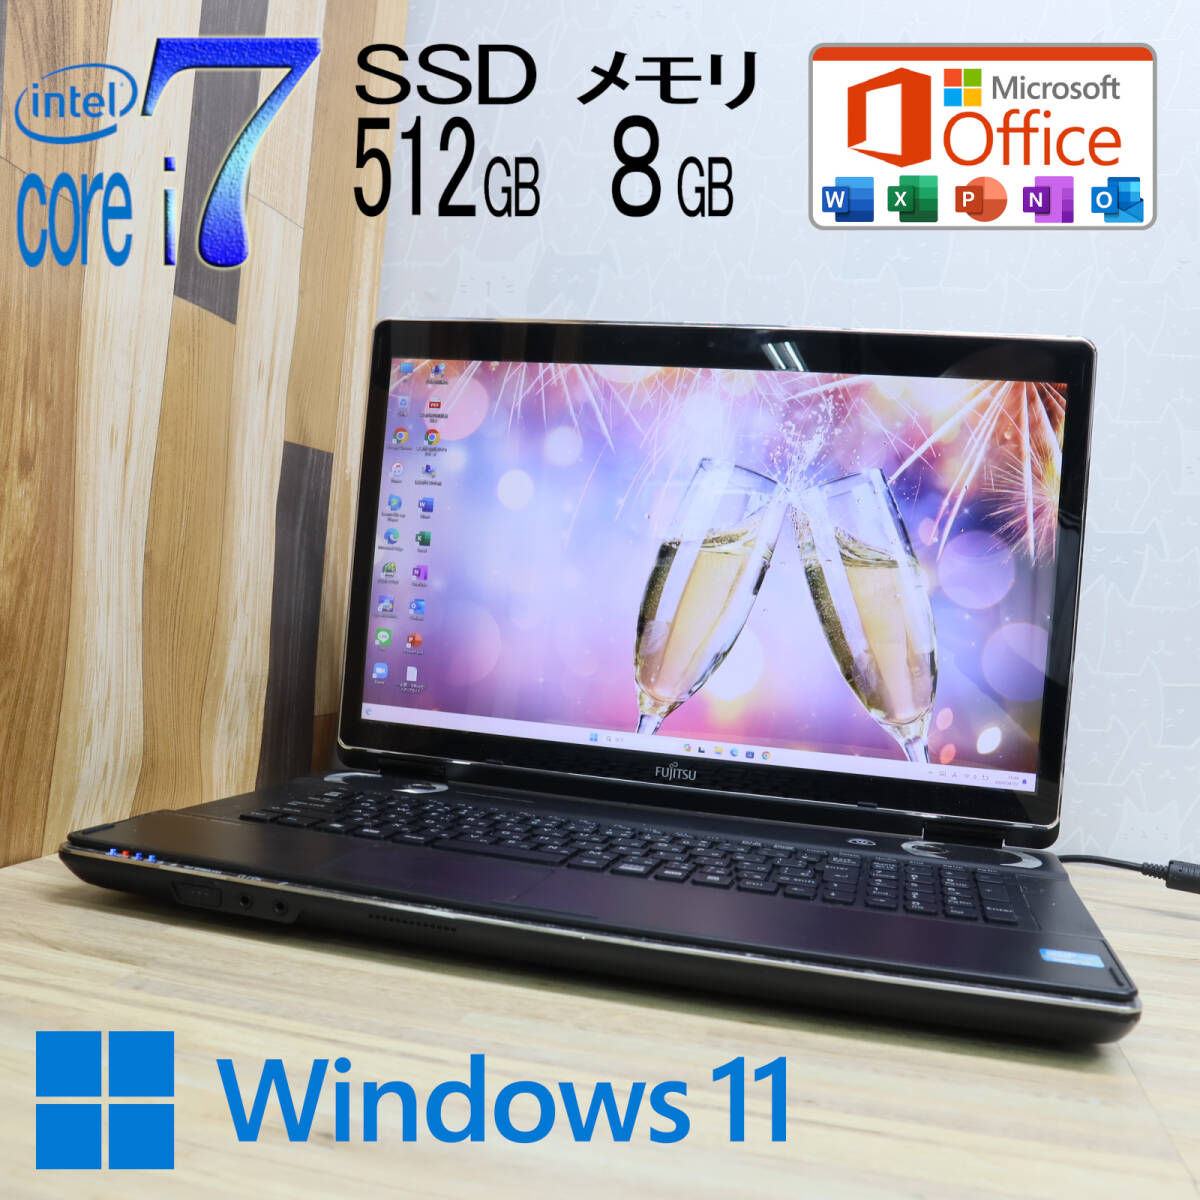 * б/у PC высший класс 4 core i7! новый товар SSD512GB память 8GB*N77D Core i7-2630QM Win11 MS Office2019 Home&Business б/у товар Note PC*P71092